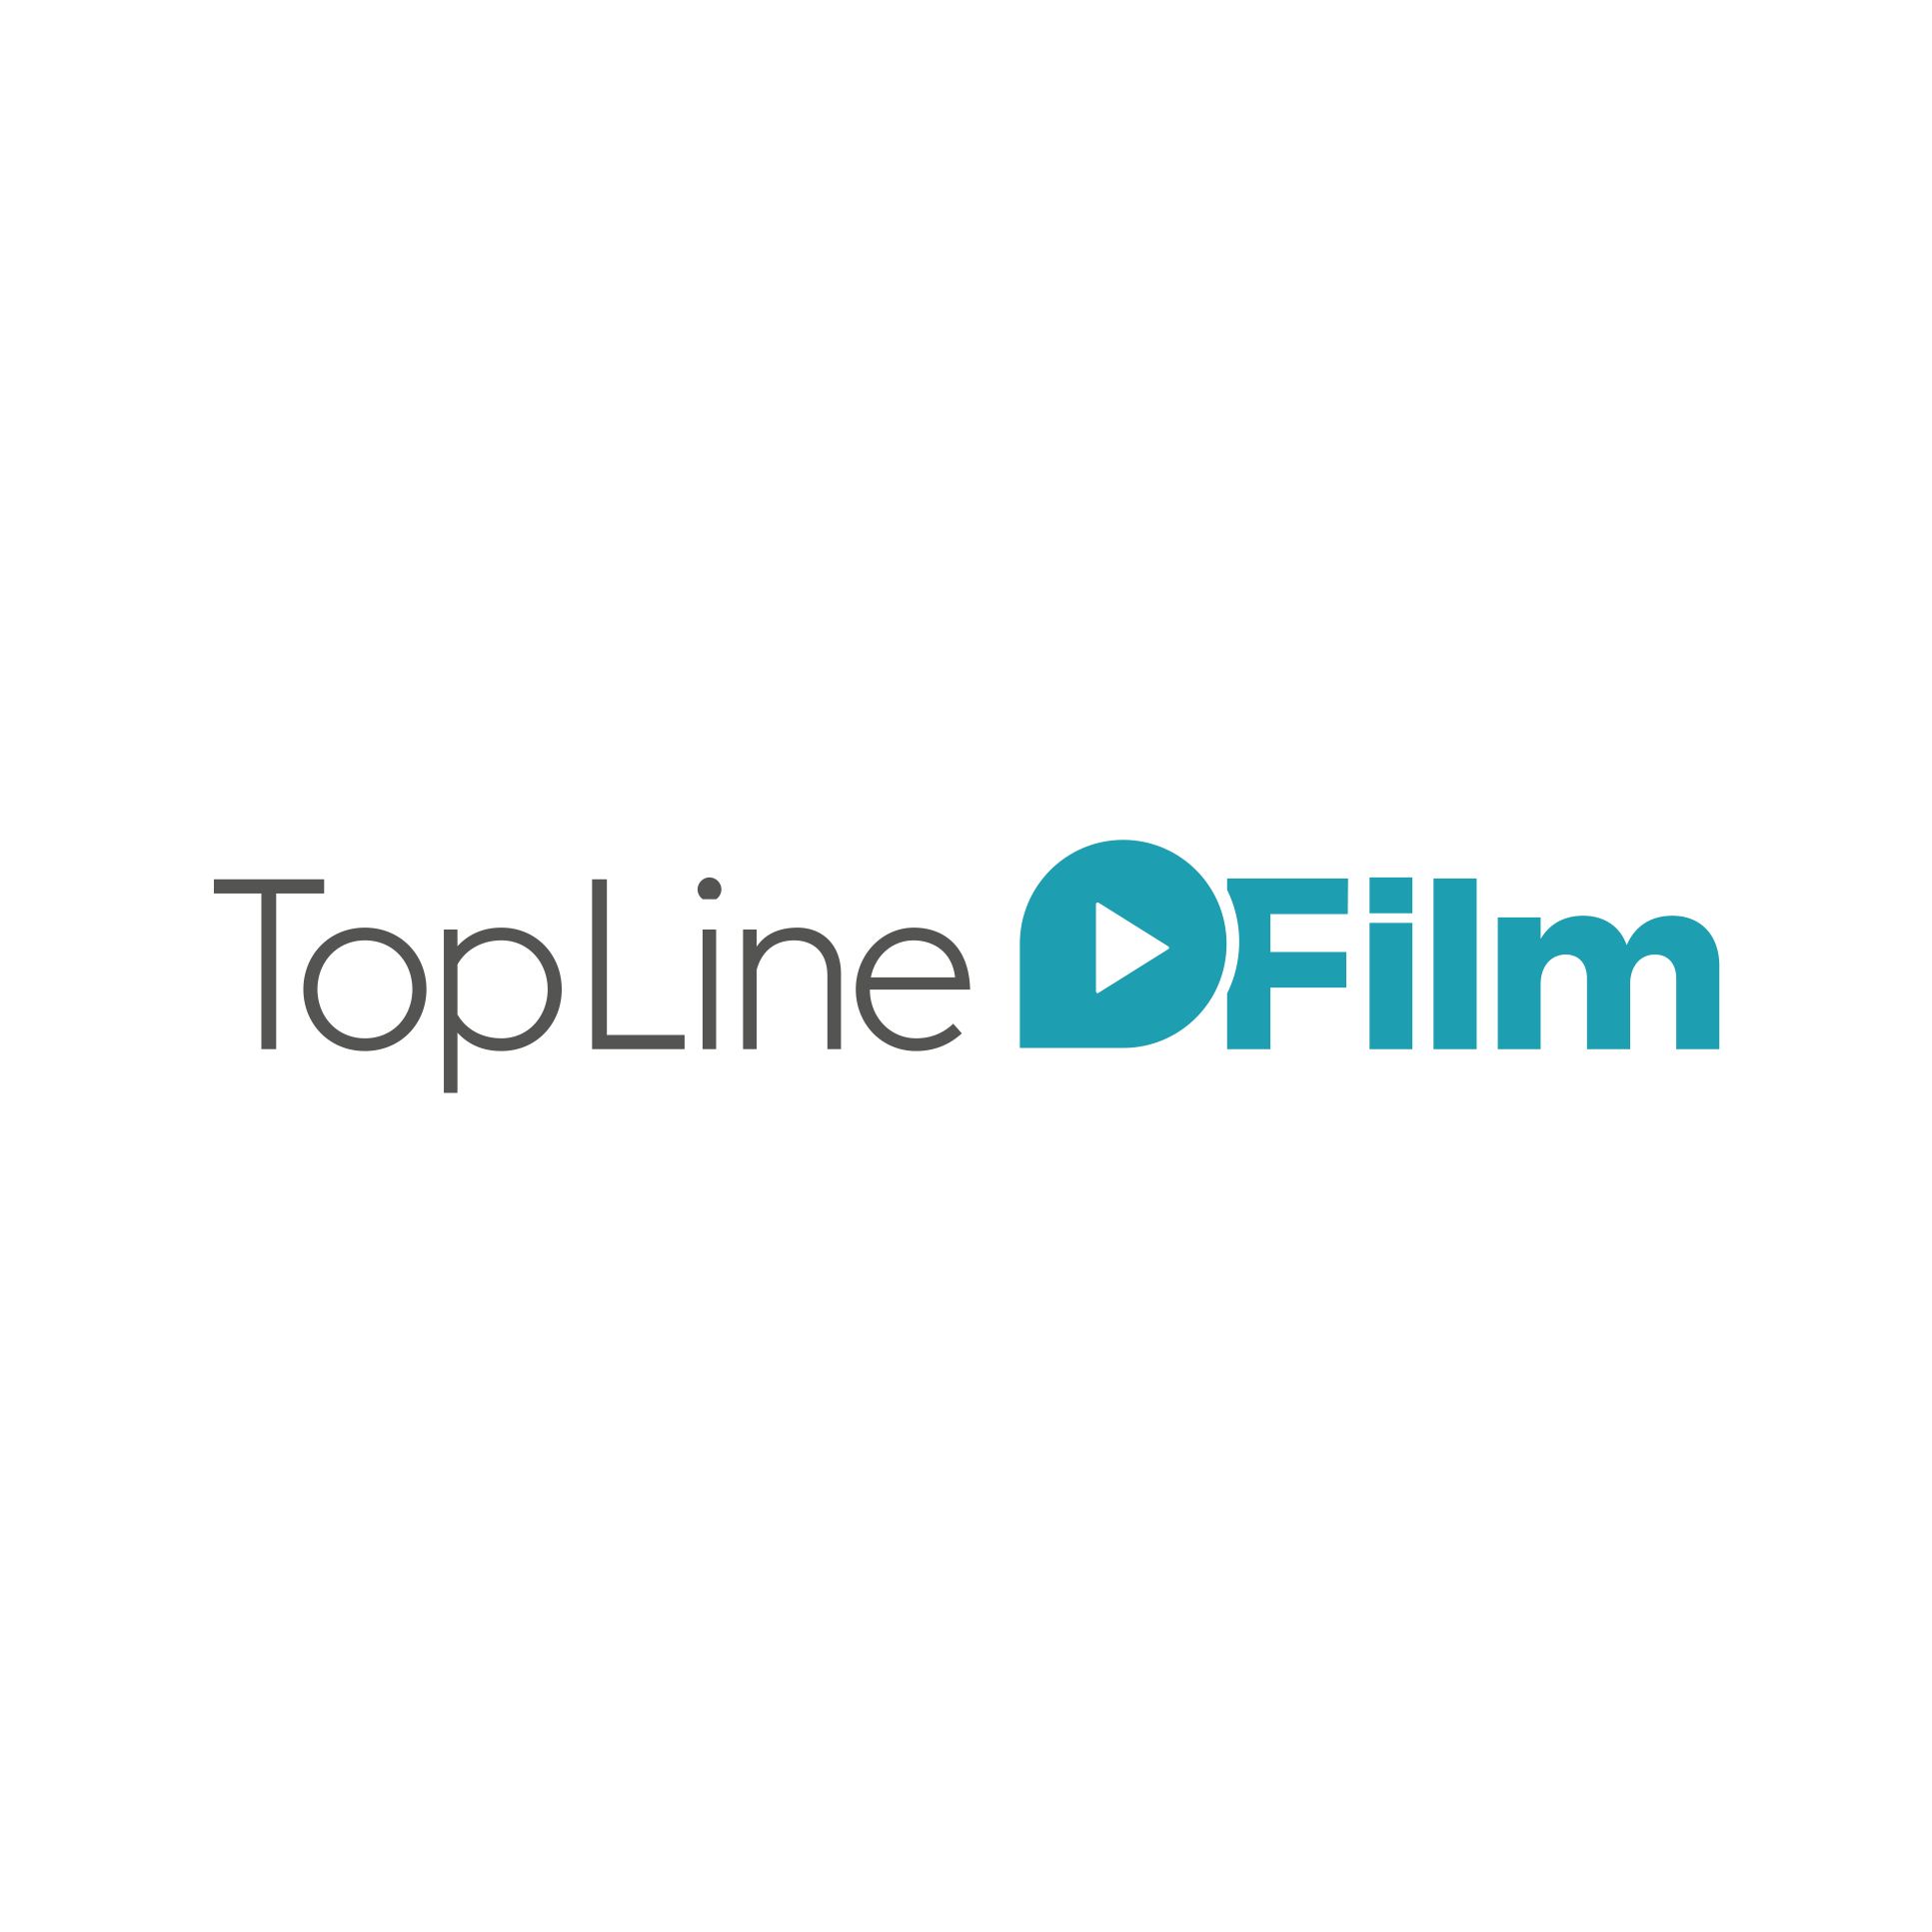 TopLineFilm logo